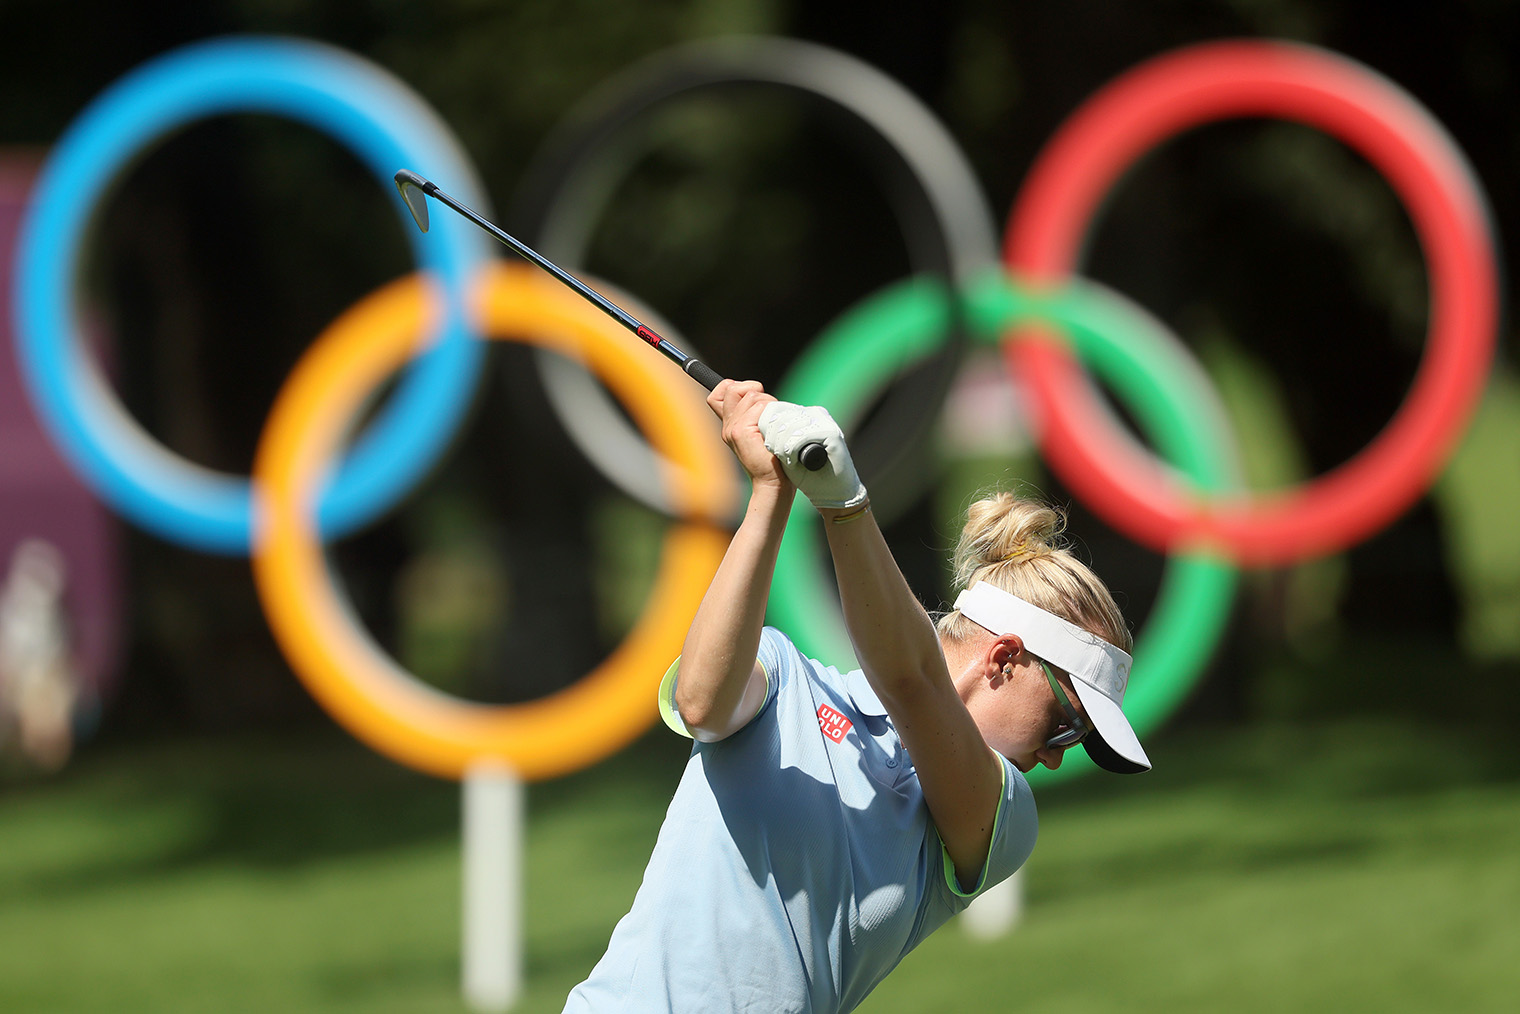 Мадлен Сагстрем из сборной Швеции на Олимпиаде 2020 года в Токио. Фотография: Mike Ehrmann / Getty Images